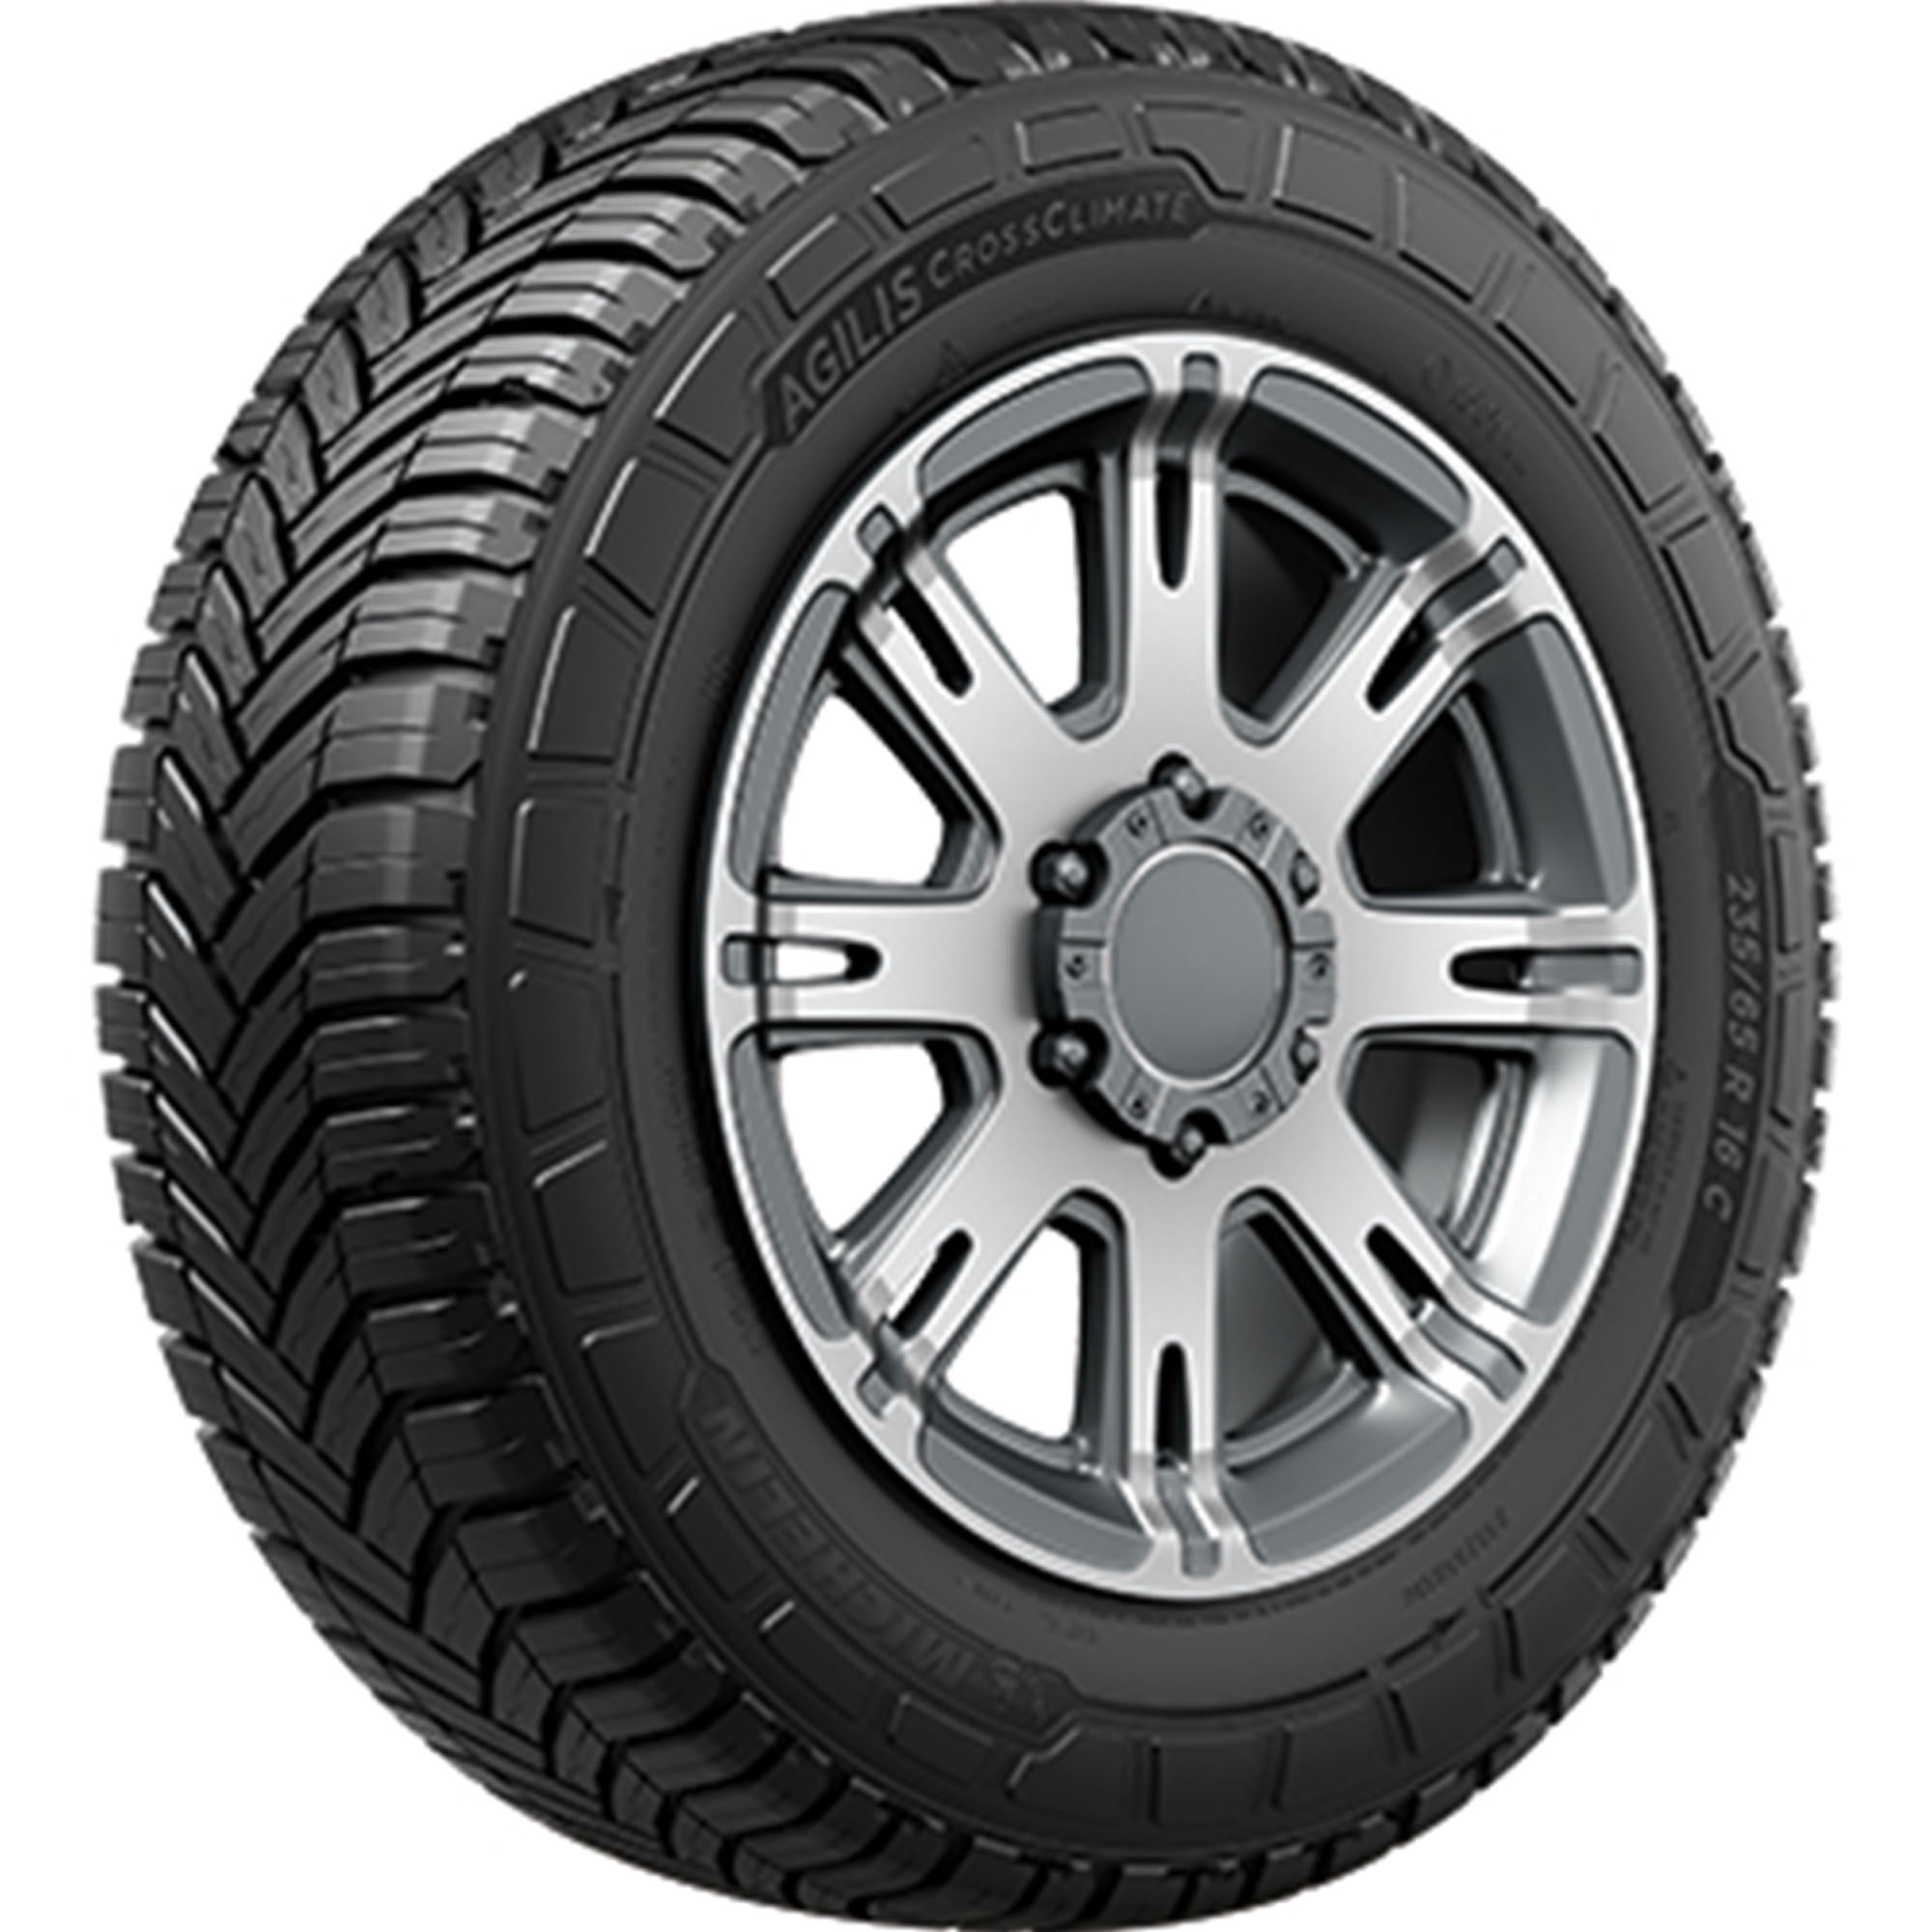 Michelin Agilis CrossClimate Commercial Van LT245/75R16 120/116R E Light  Truck Tire